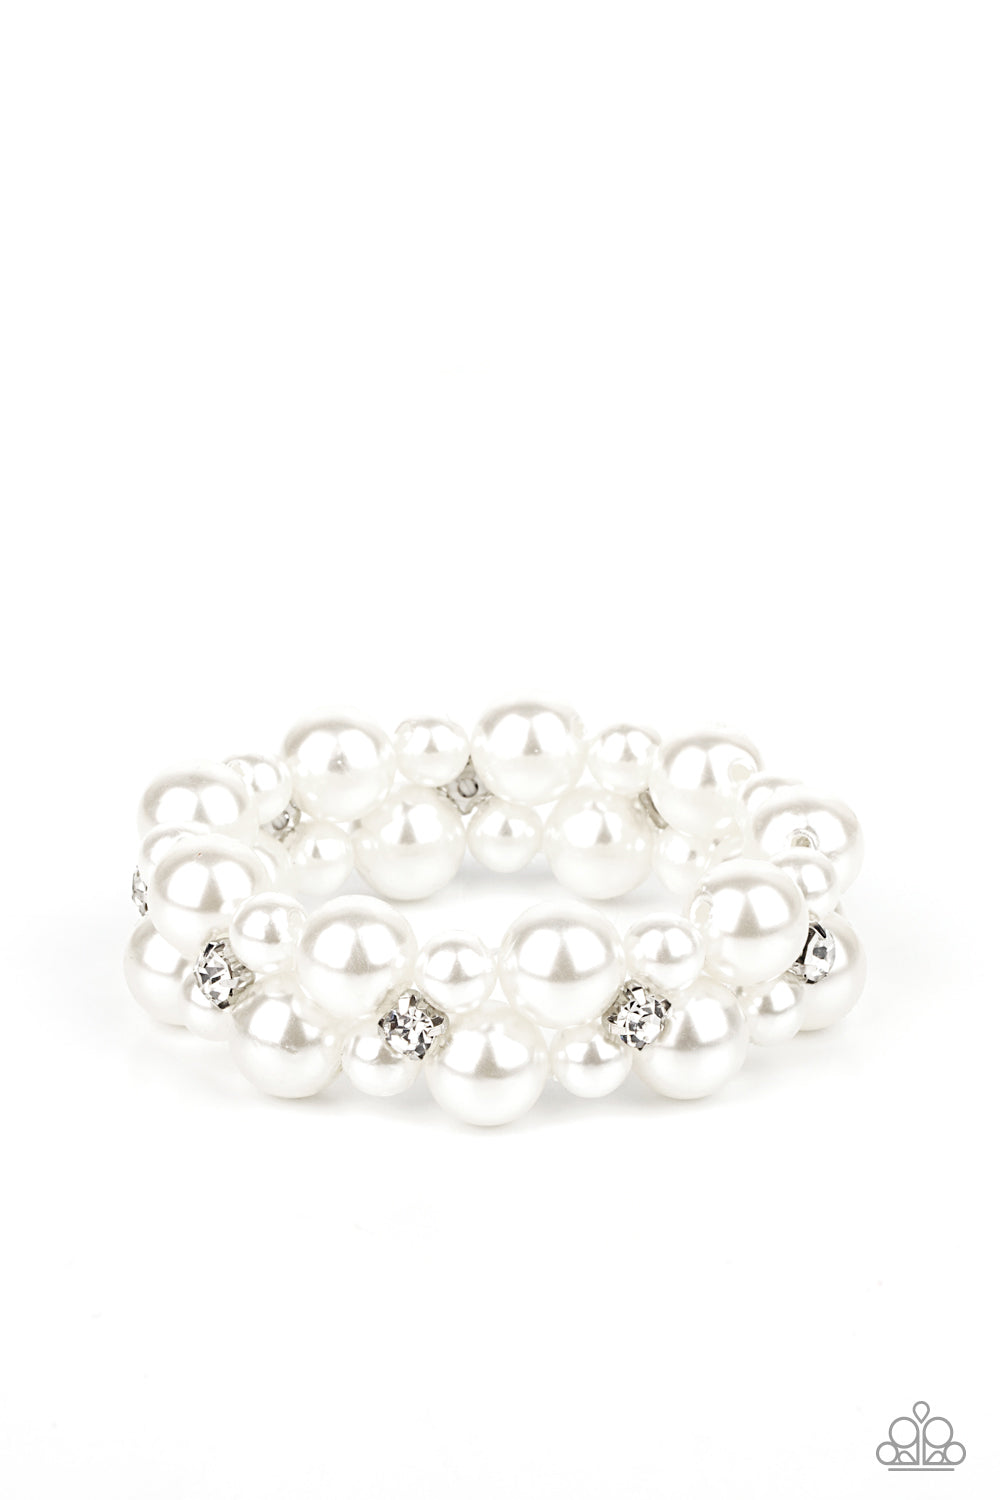 Flirt Alert - White (Pearls) Bracelet freeshipping - JewLz4u Gemstone Gallery